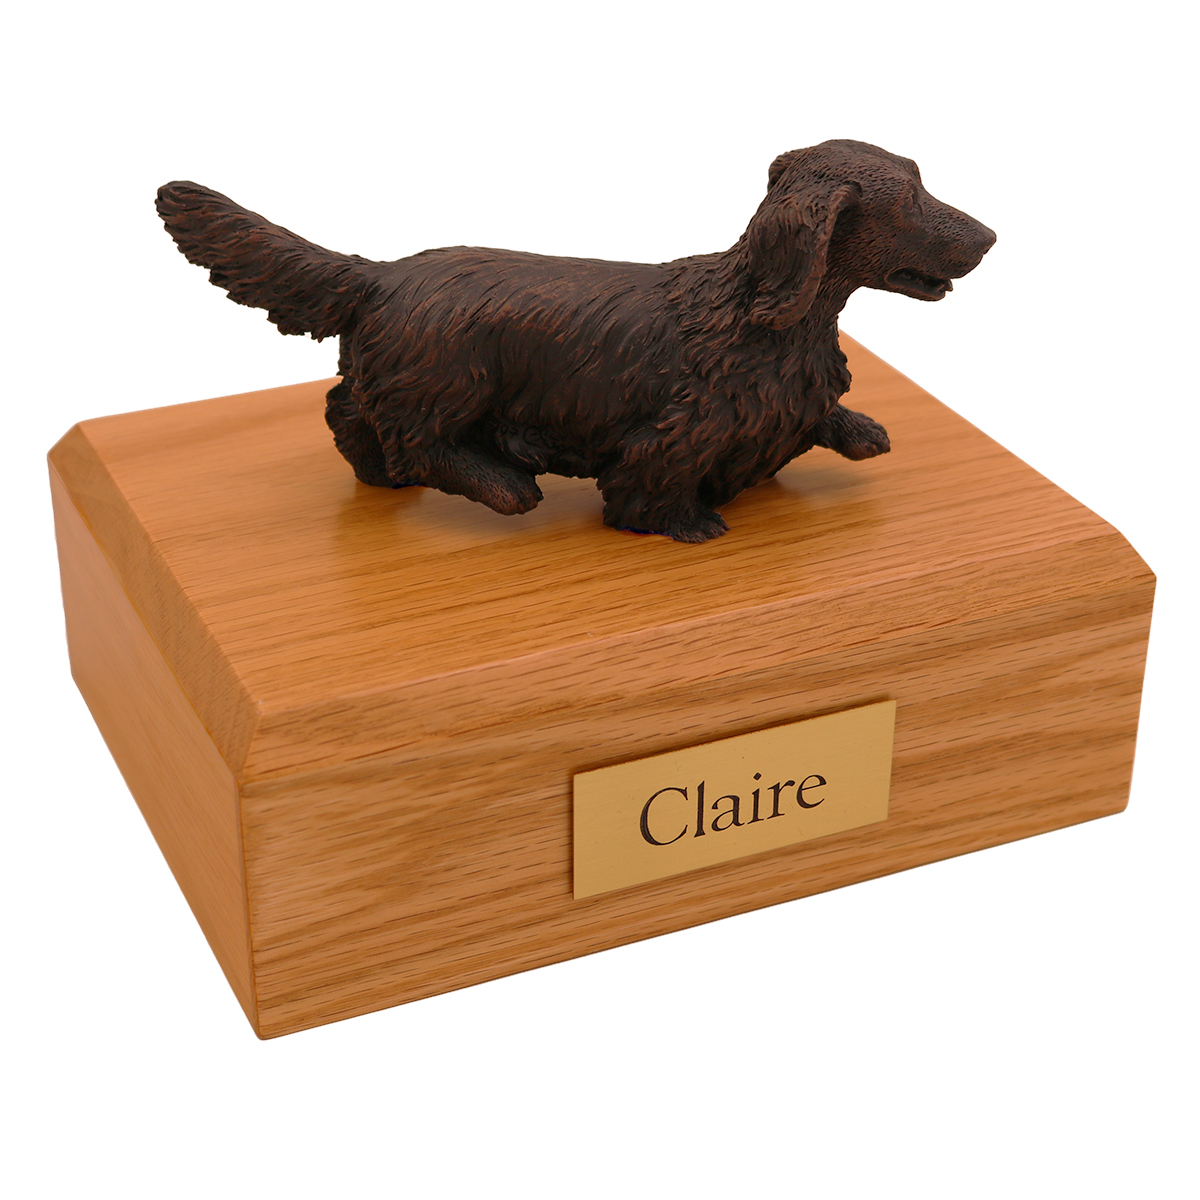 Dog, Dachshund, Long-haired, Bronze - Figurine Urn